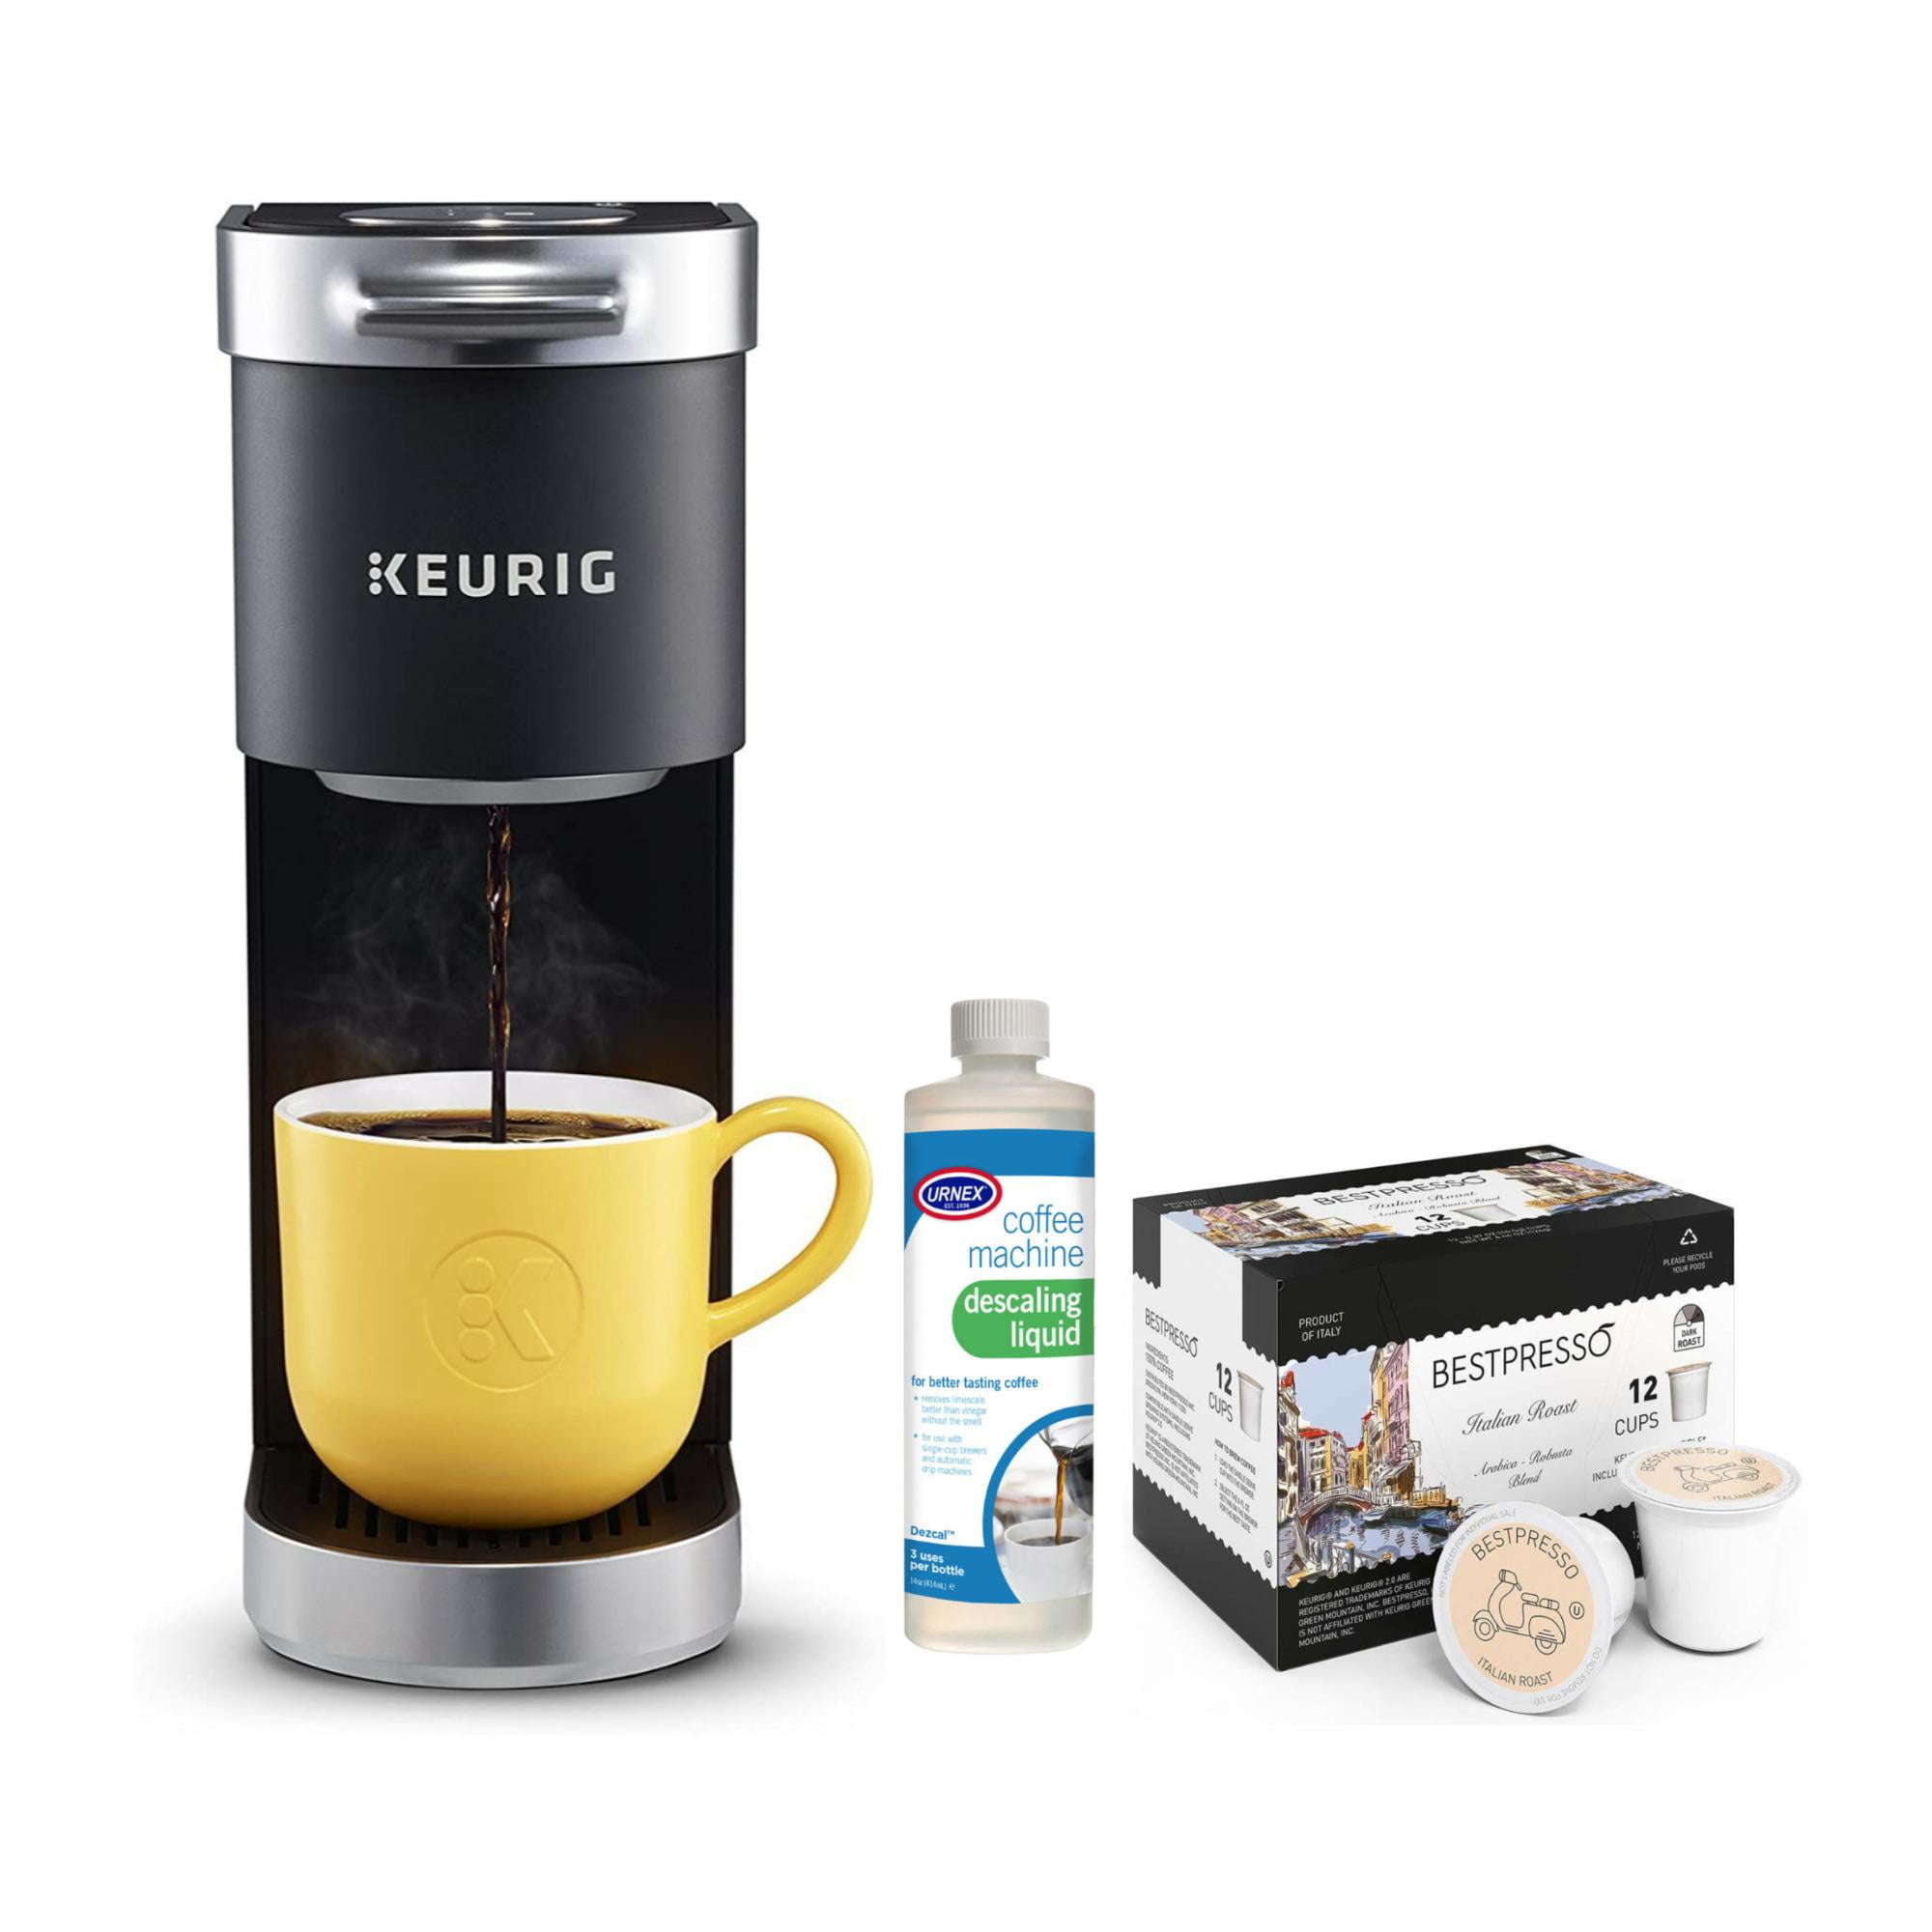 Keurig K-Mini Plus Single Serve Coffee Maker (Black) with Accesories - image 1 of 11